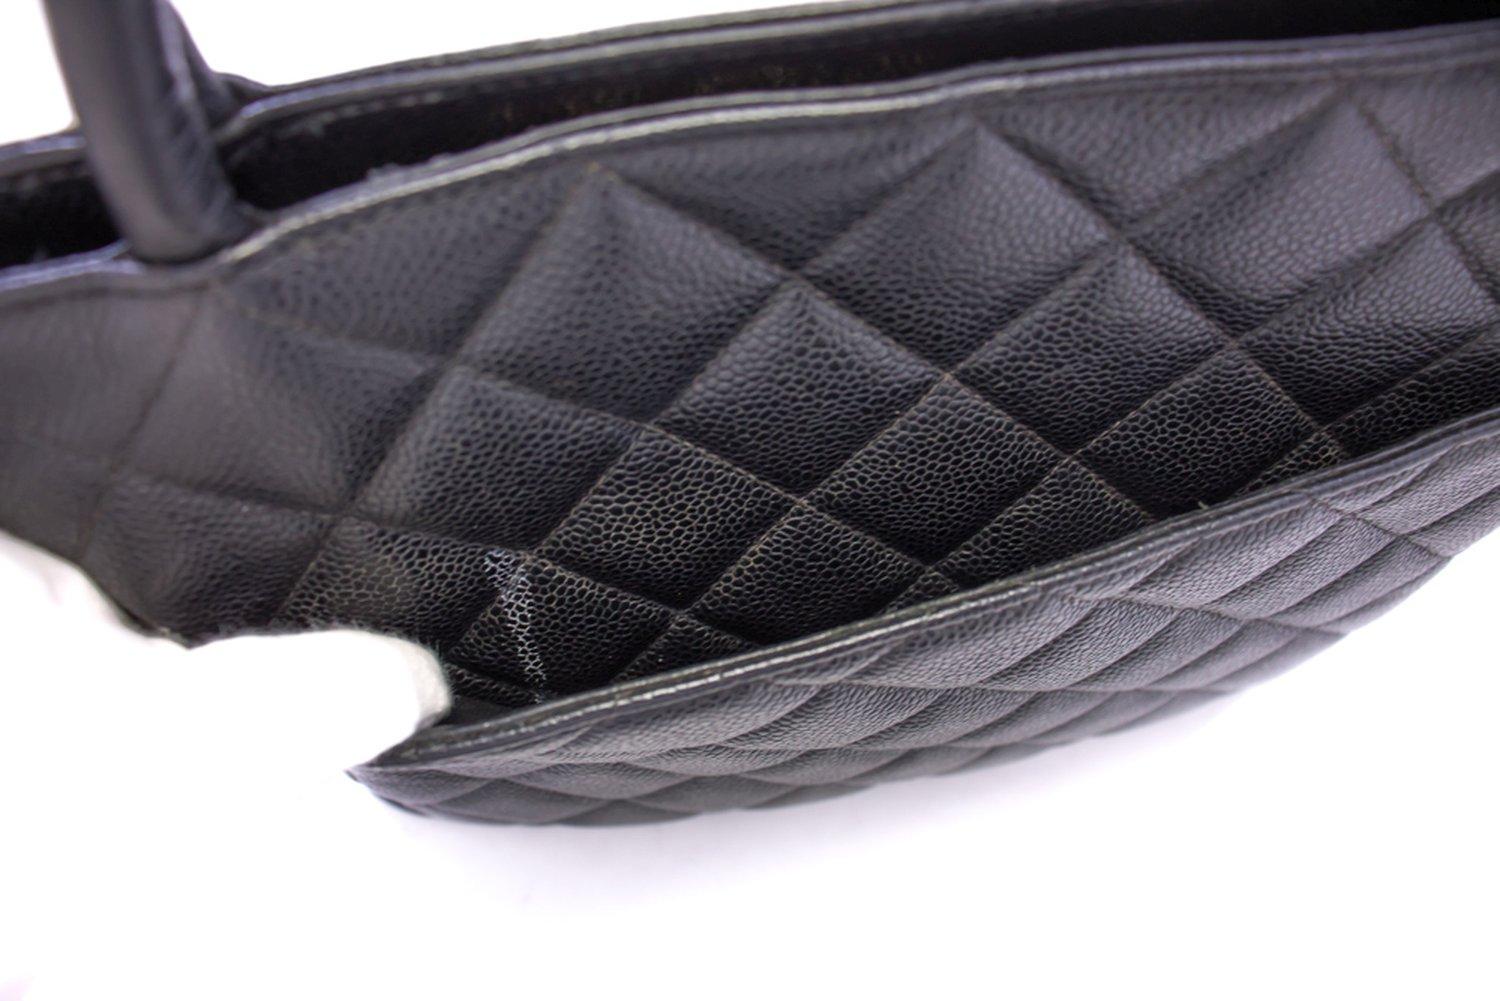 CHANEL Silver Medallion Caviar Shoulder Shopping Tote Bag Black 12